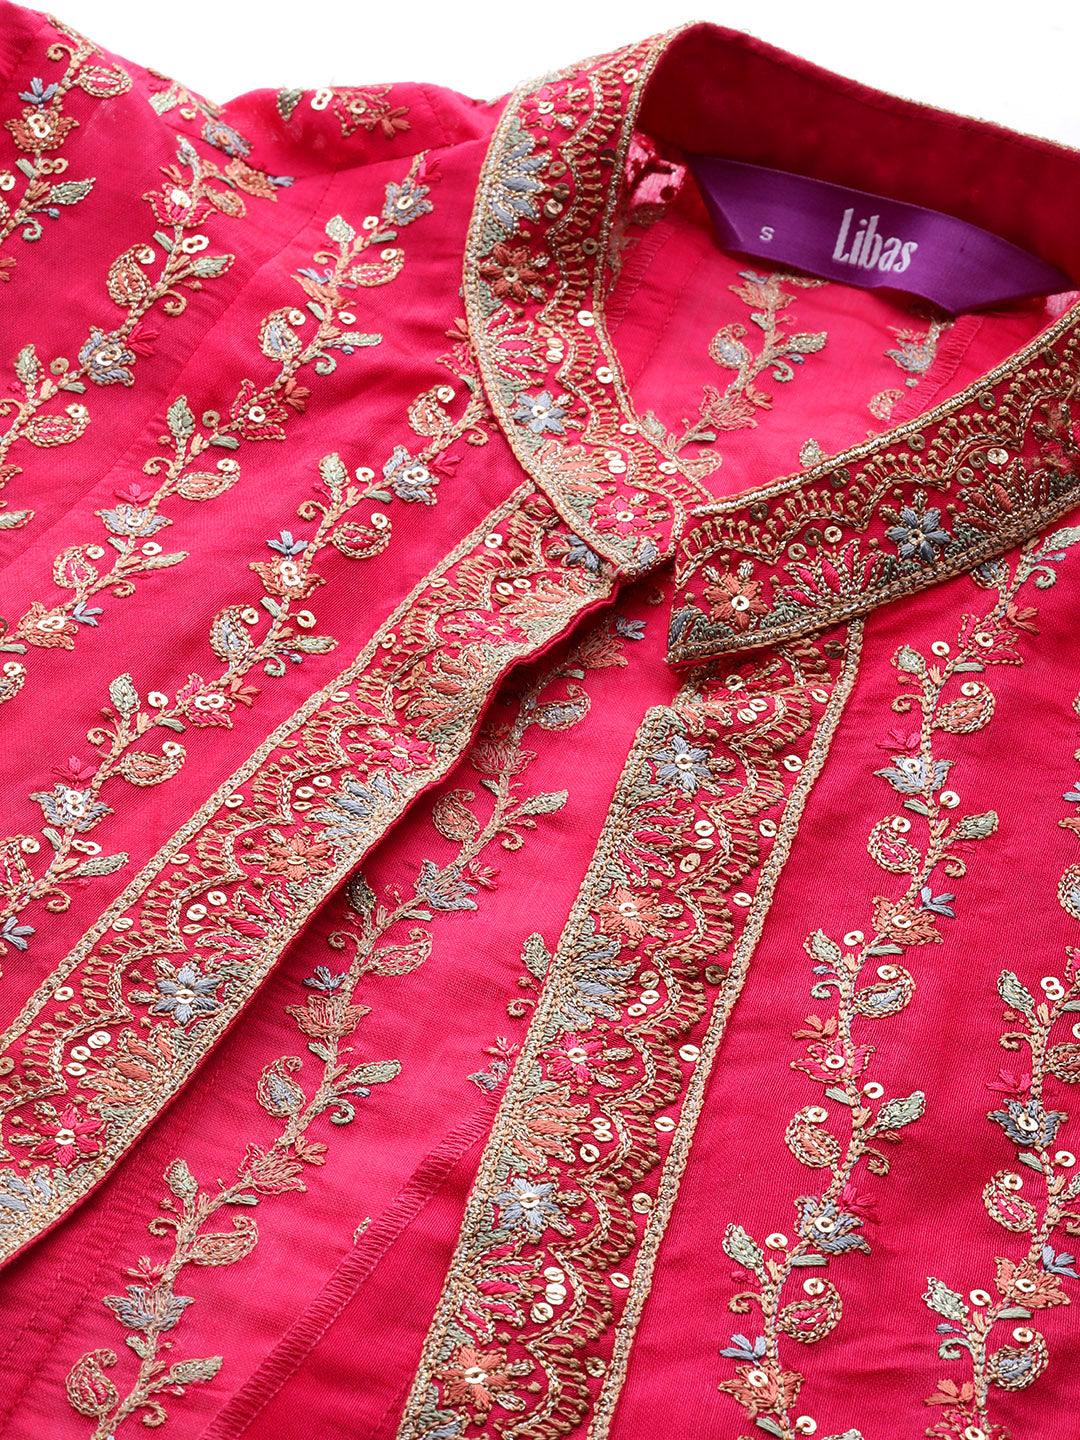 Libas Art Pink Embroidered Silk Co-ord Set - Libas